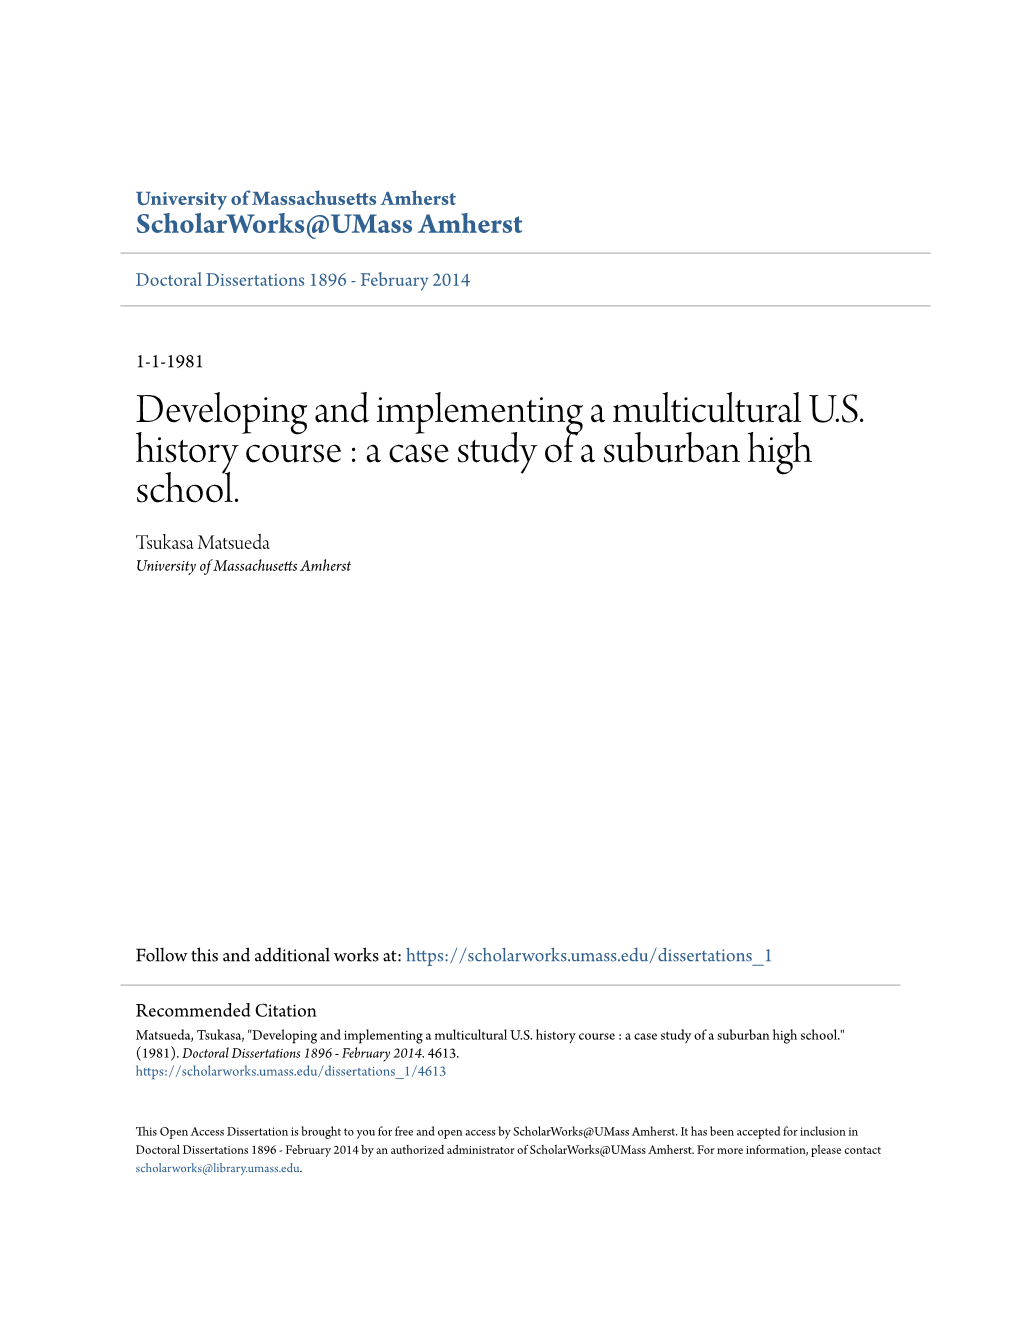 A Case Study of a Suburban High School. Tsukasa Matsueda University of Massachusetts Amherst